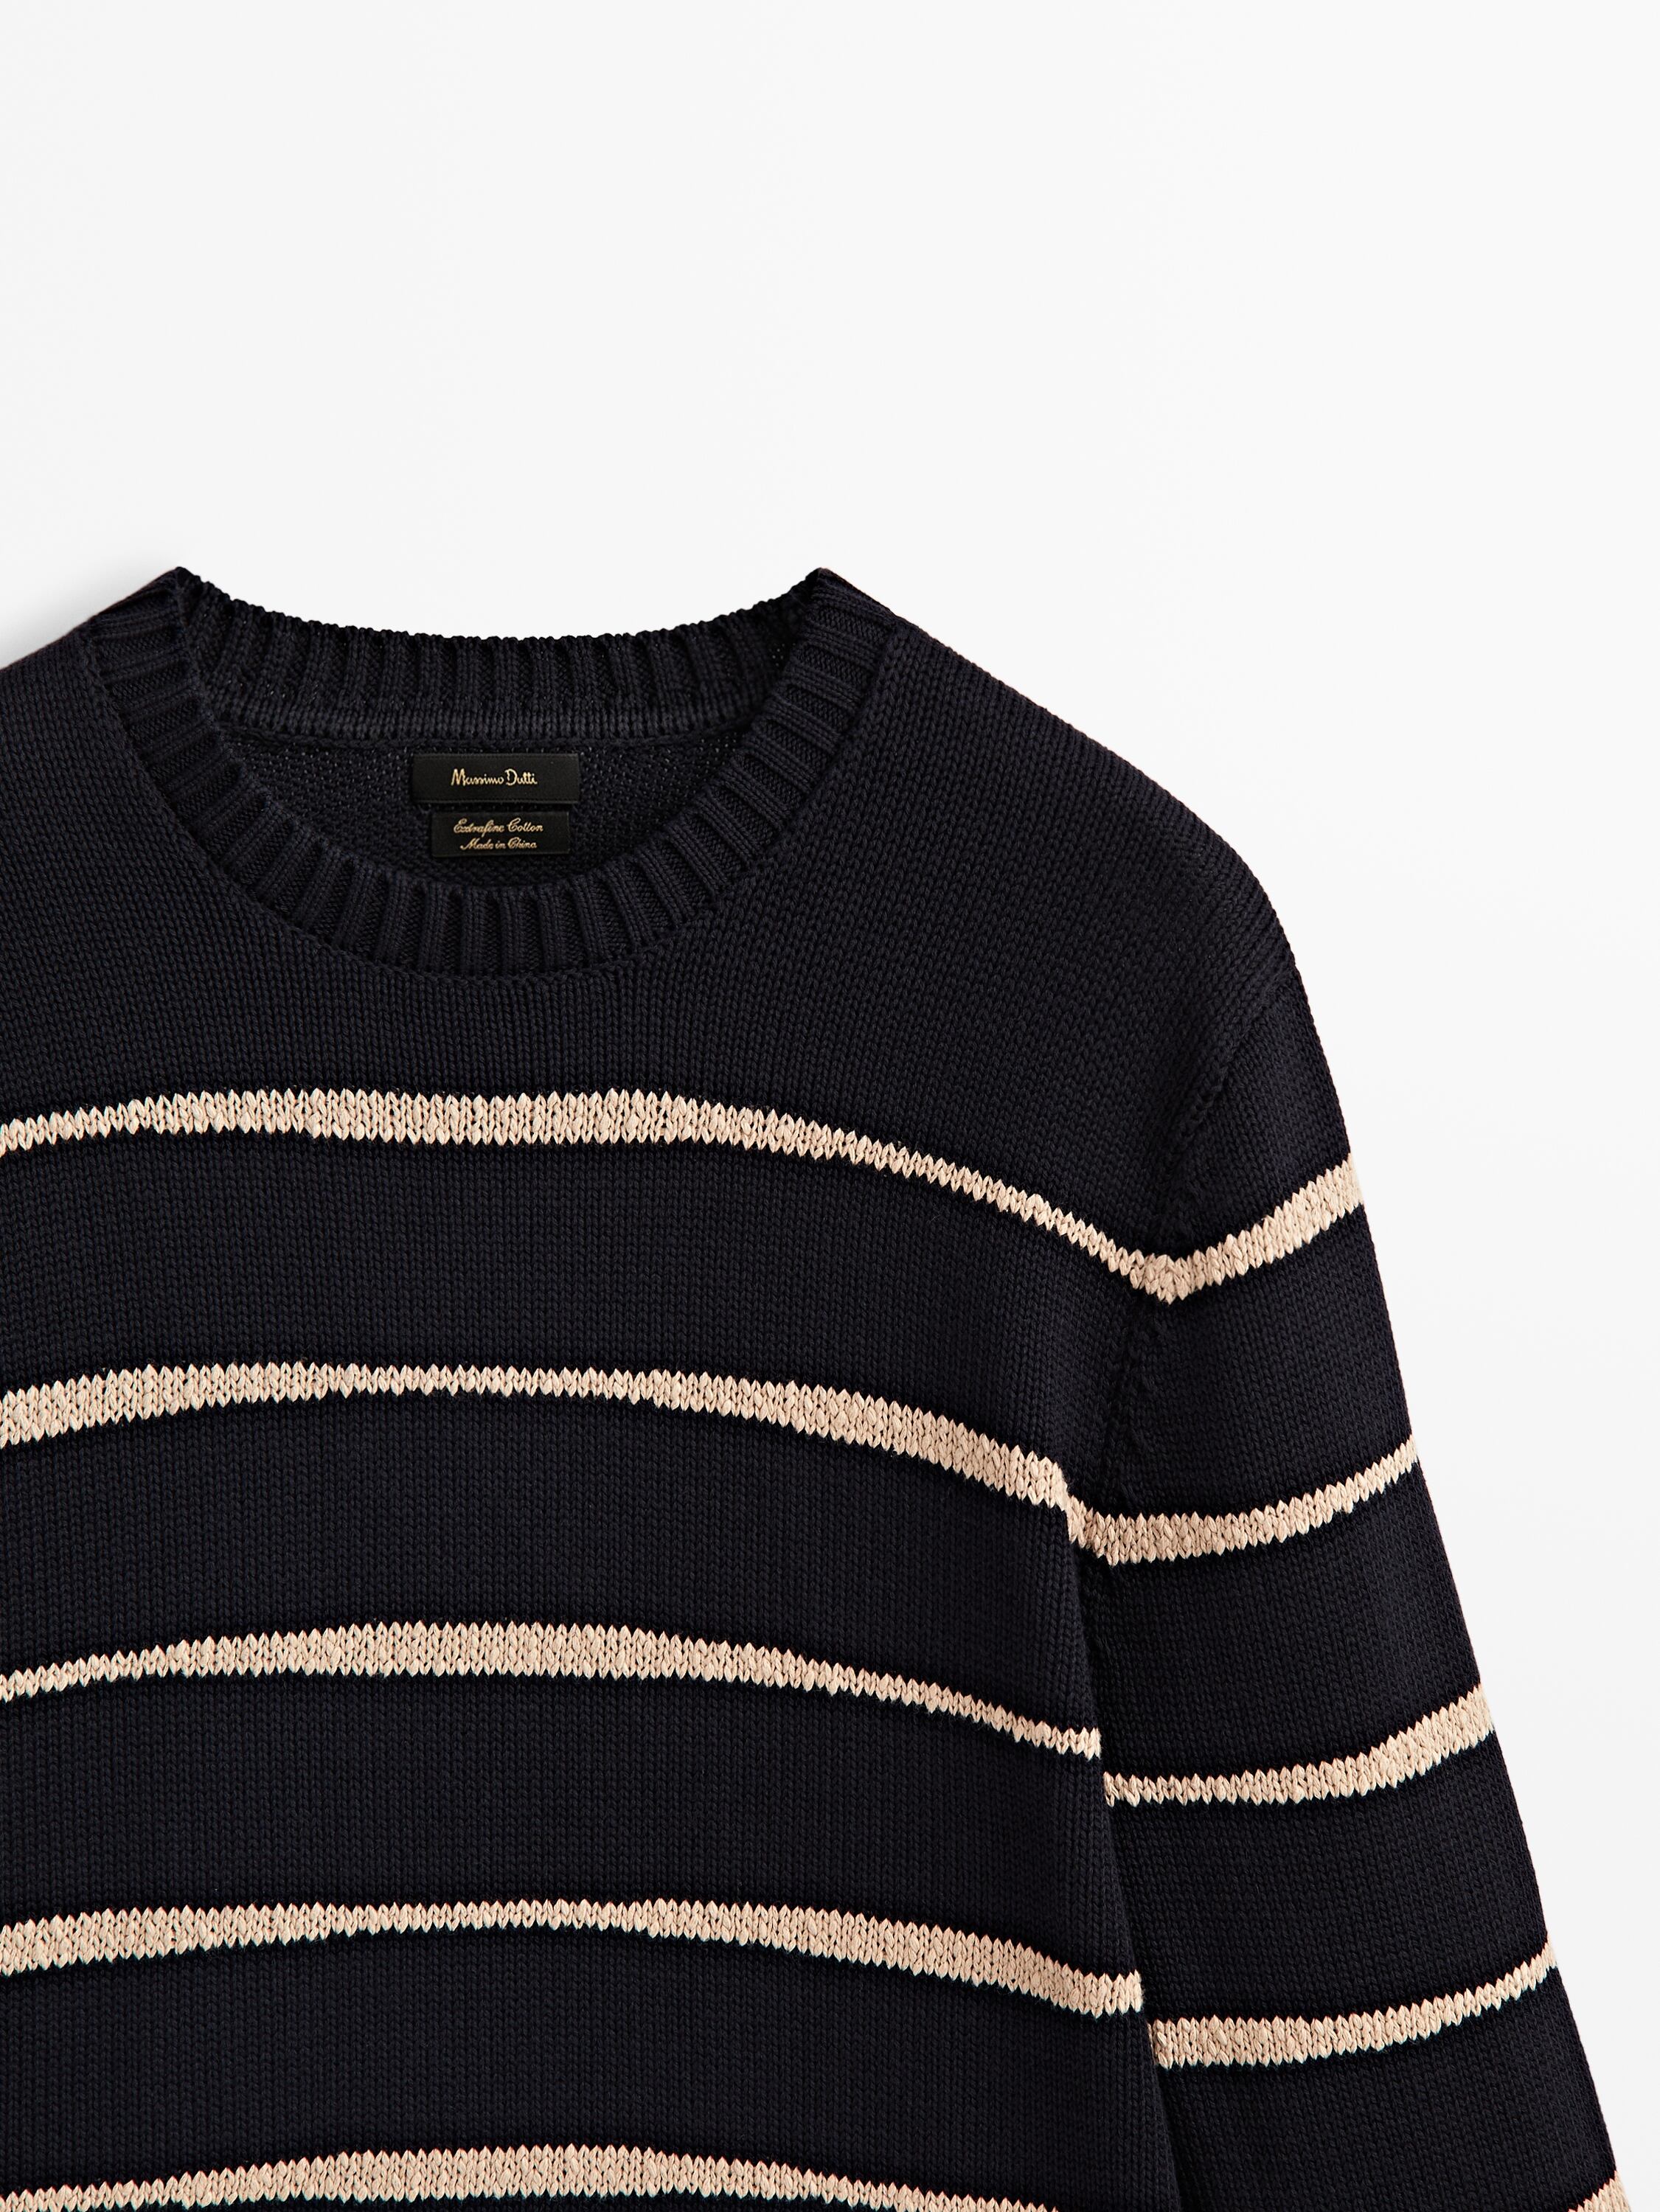 Striped knit crew neck sweater